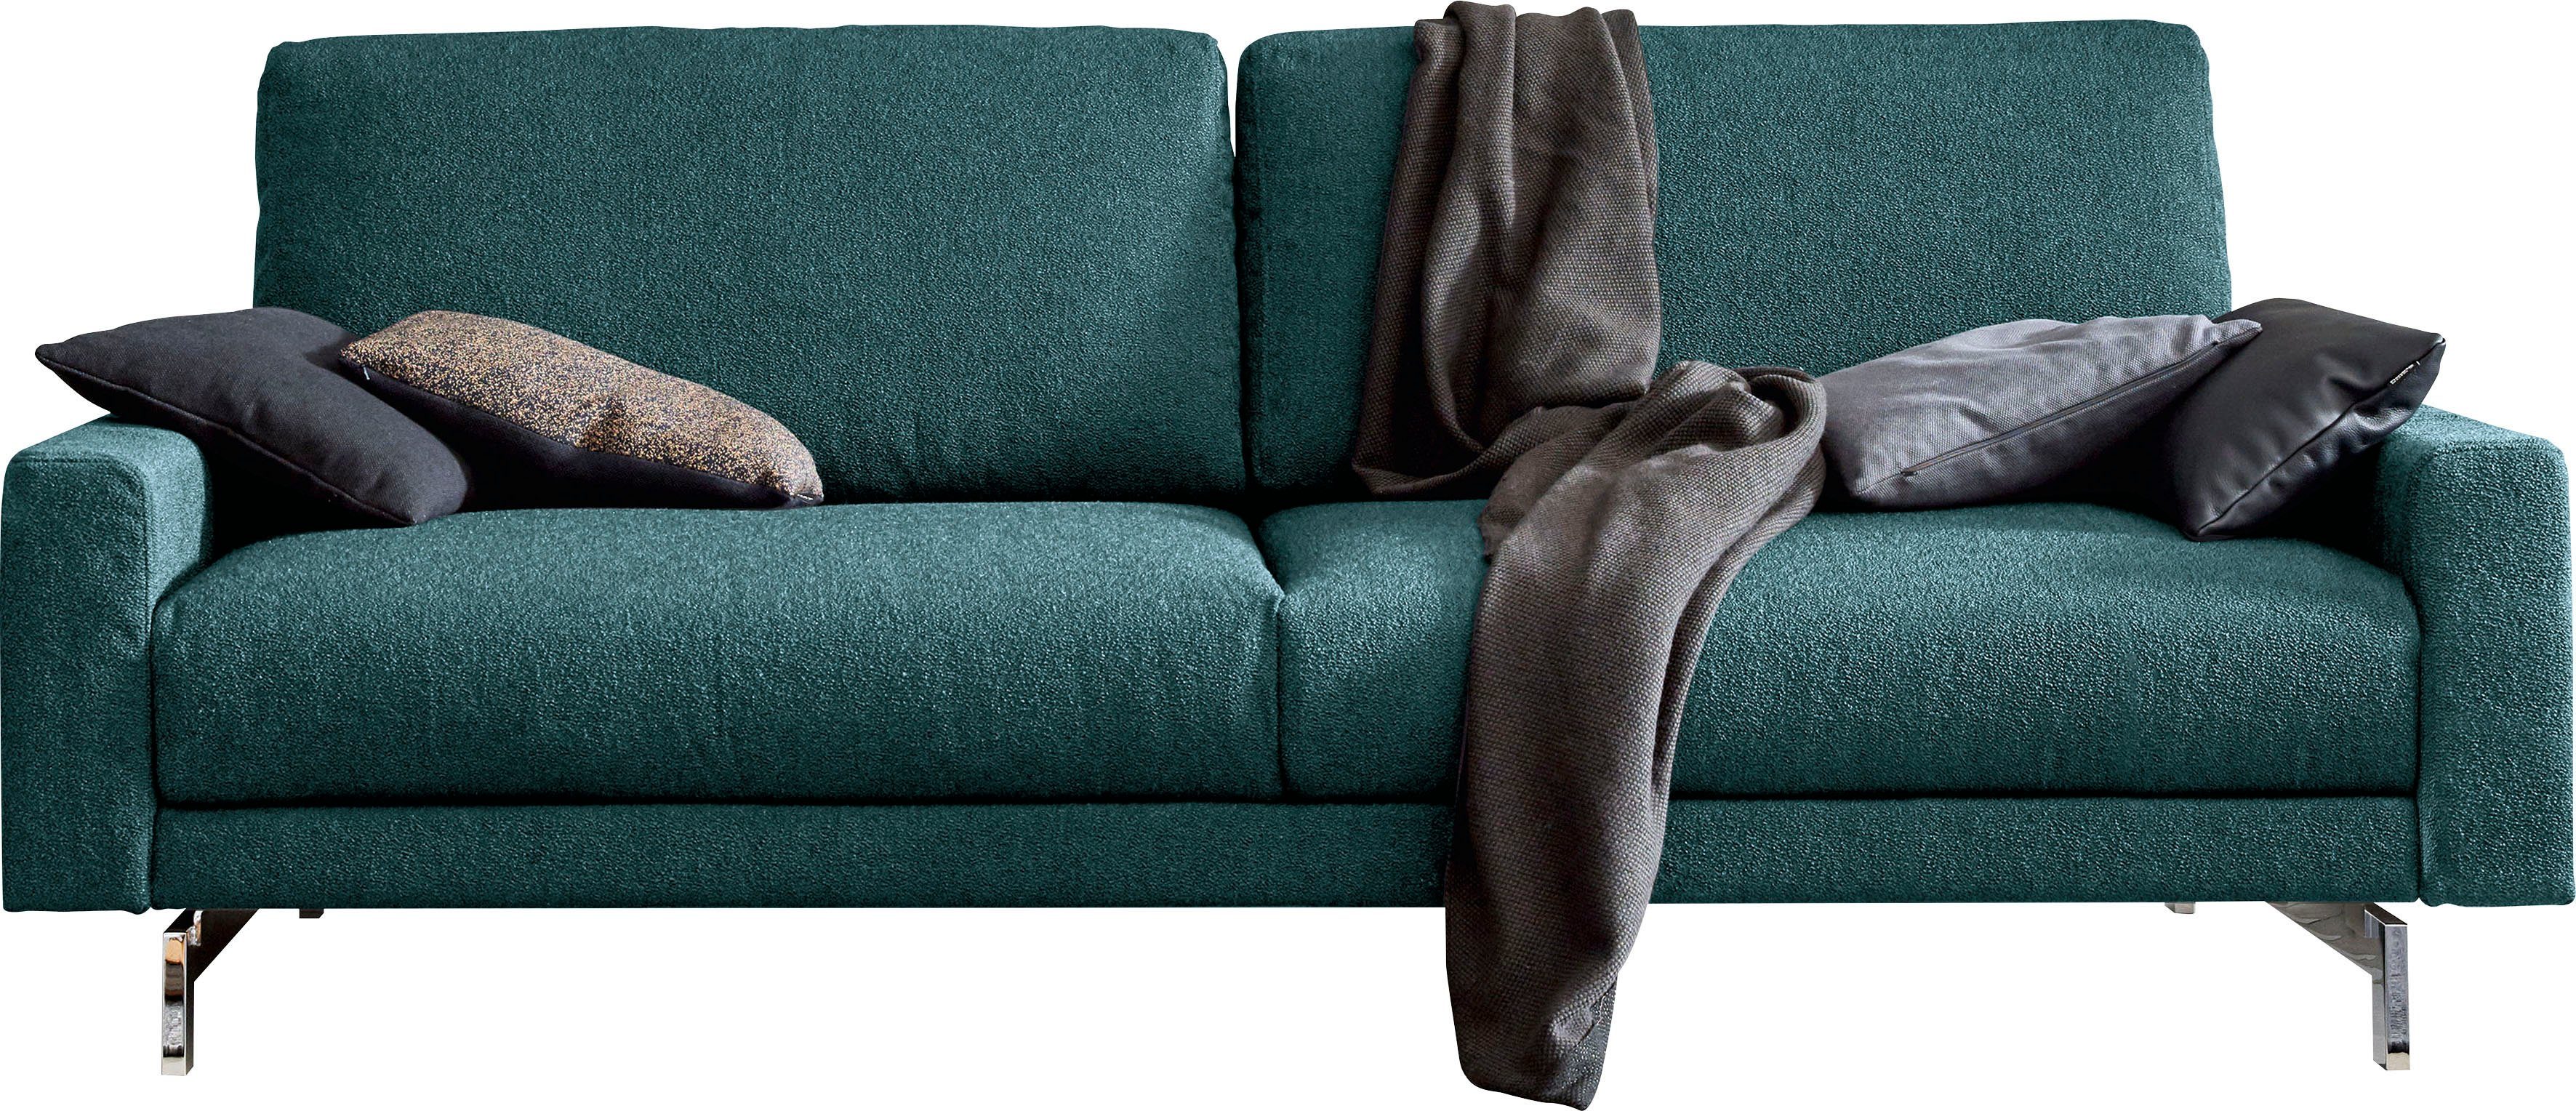 hülsta Fuß glänzend, hs.450, 2-Sitzer chromfarben niedrig, cm Breite Armlehne sofa 164